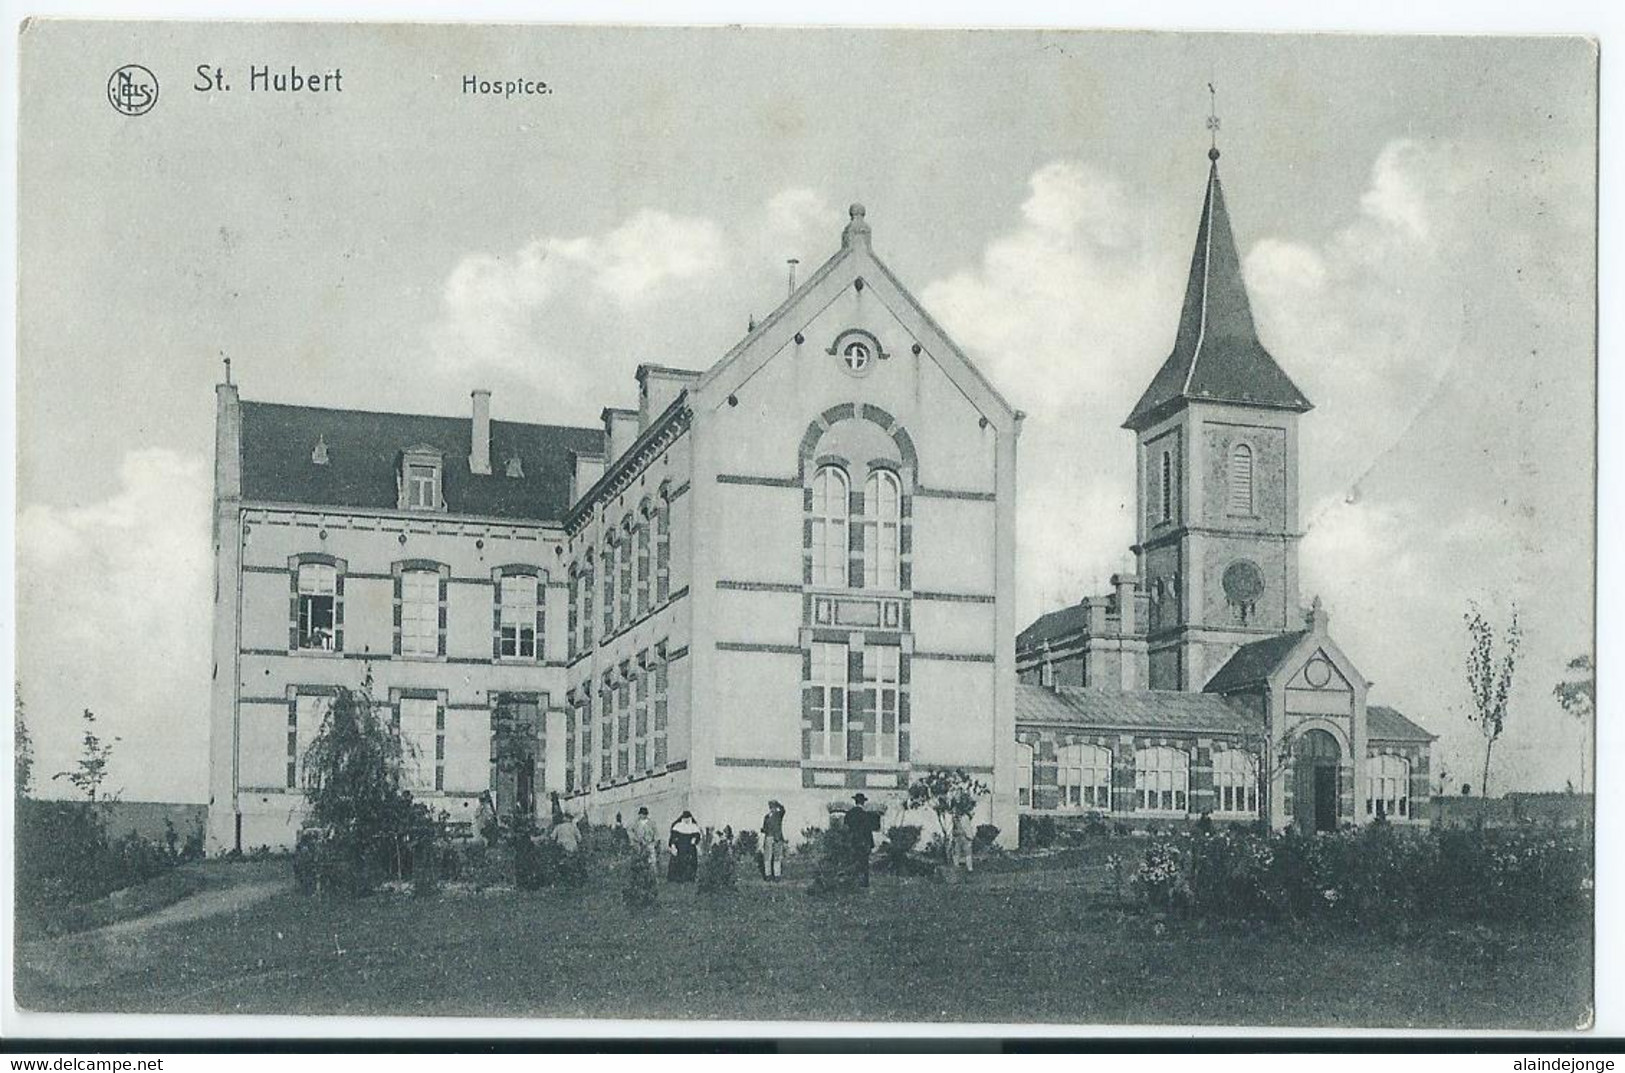 Saint-Hubert - Hospice - Edition Hôtel Petit, St-Hubert - 1912 - Saint-Hubert